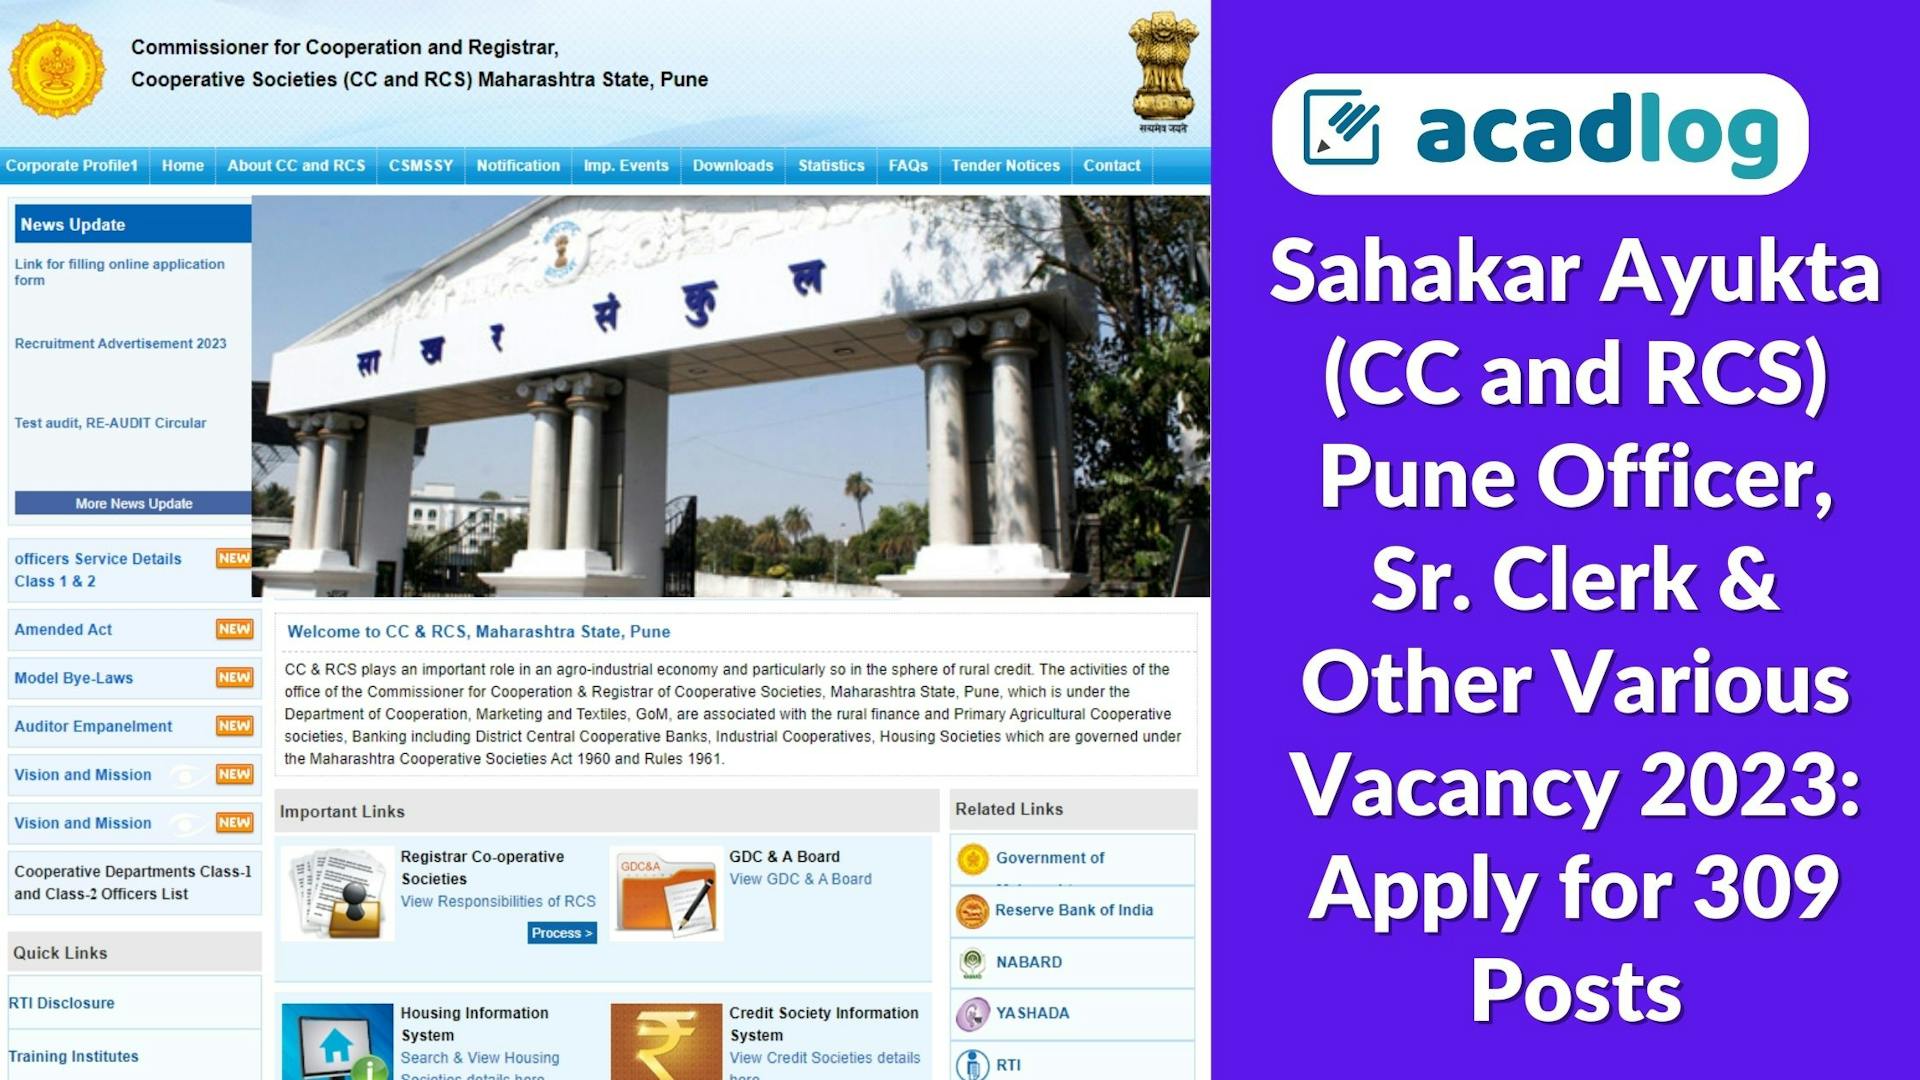 Sahakar Ayukta (CC and RCS) Pune Officer, Sr. Clerk & Other Various Vacancy 2023: Apply for 309 Posts